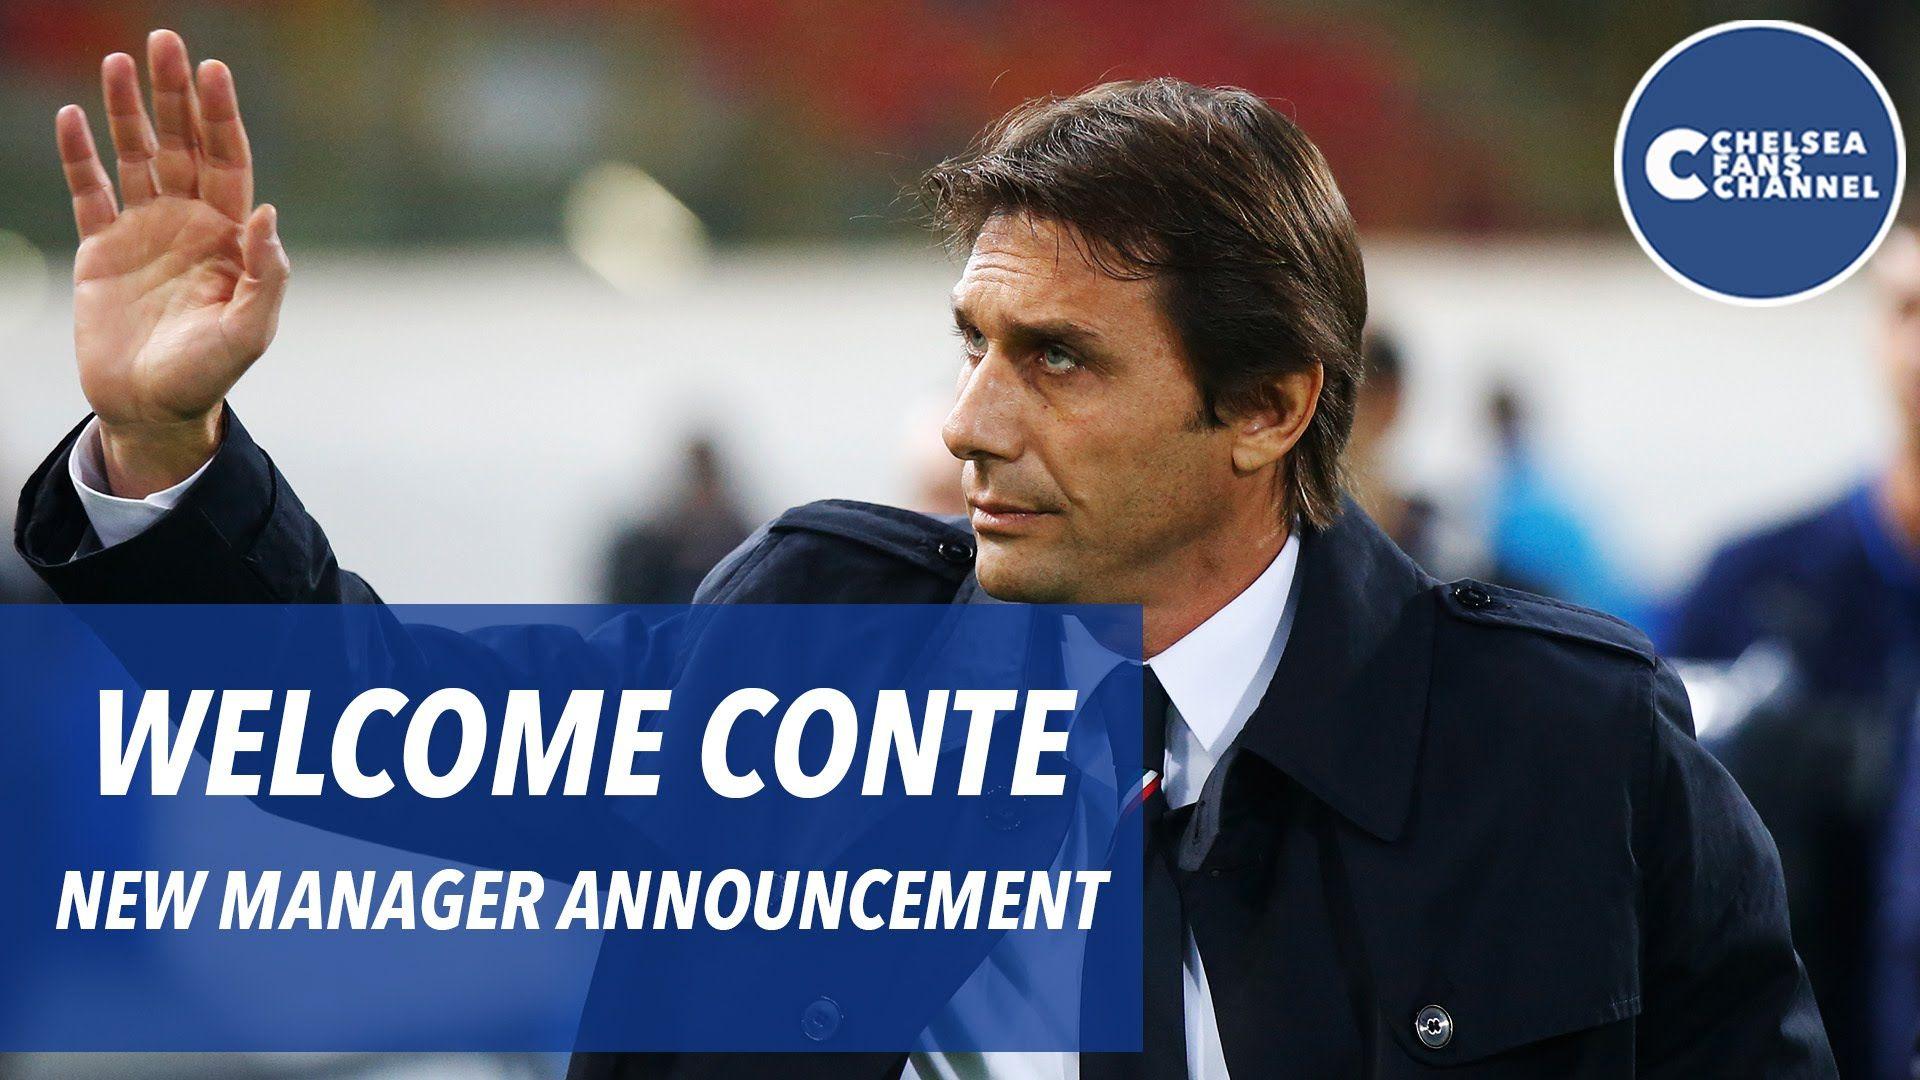 Antonio Conte Announce New Manager